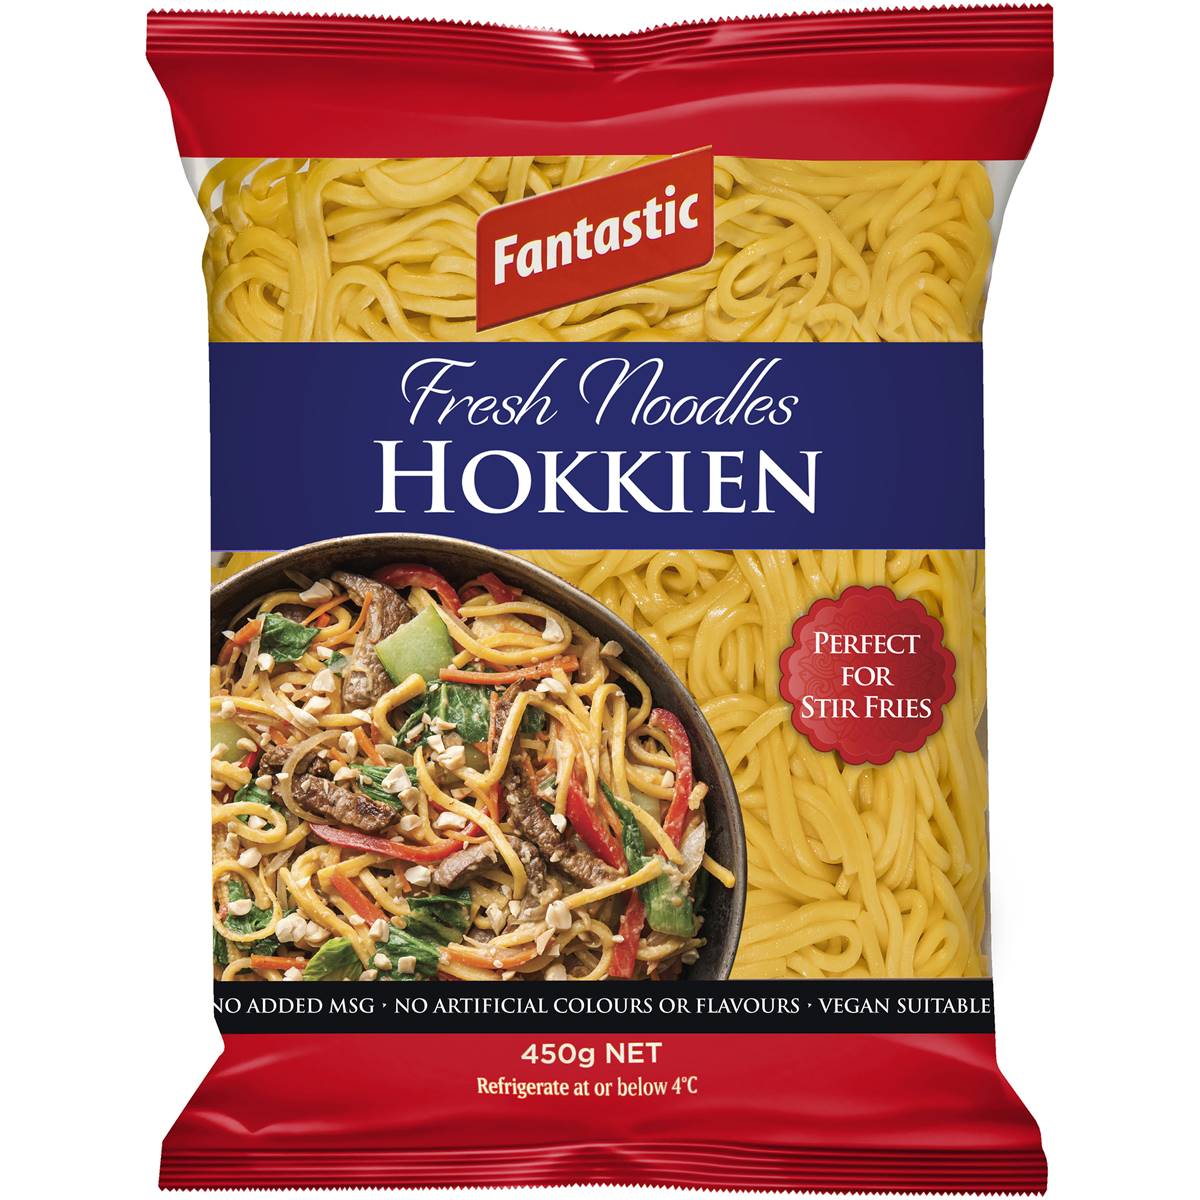 Fantastic Fresh Noodles Hokkien